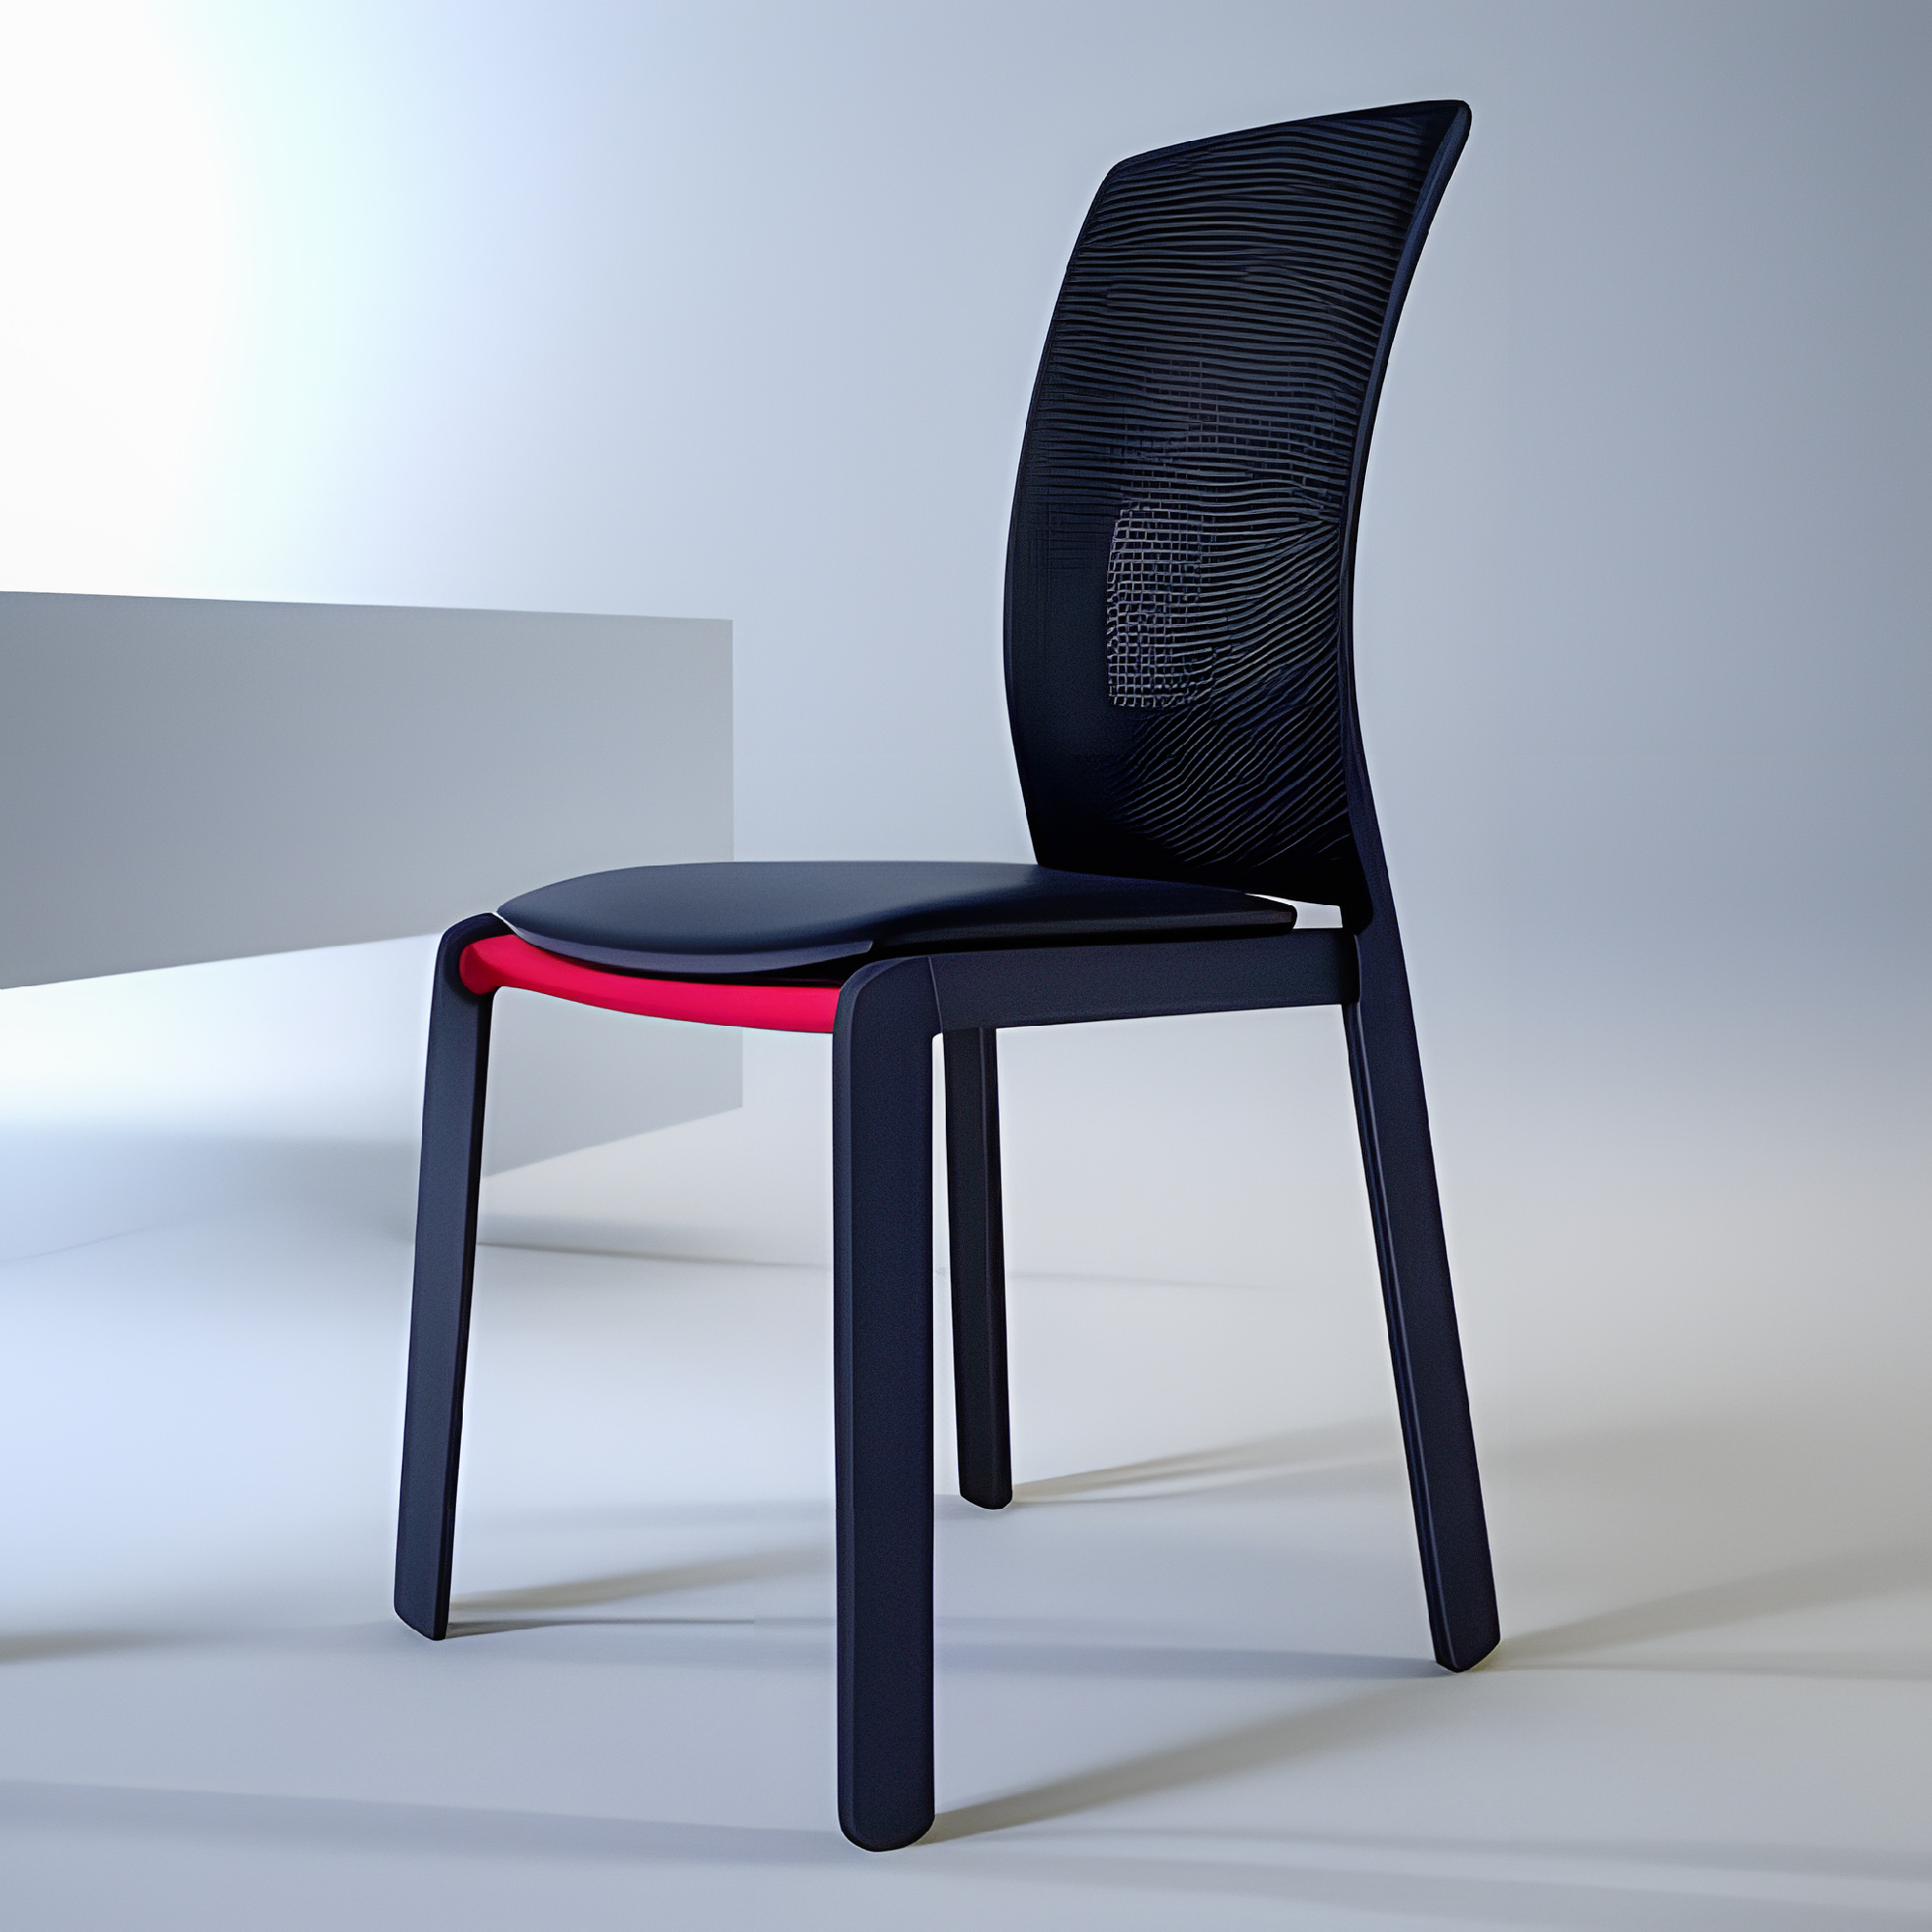 Minimalistic Chair design by ai